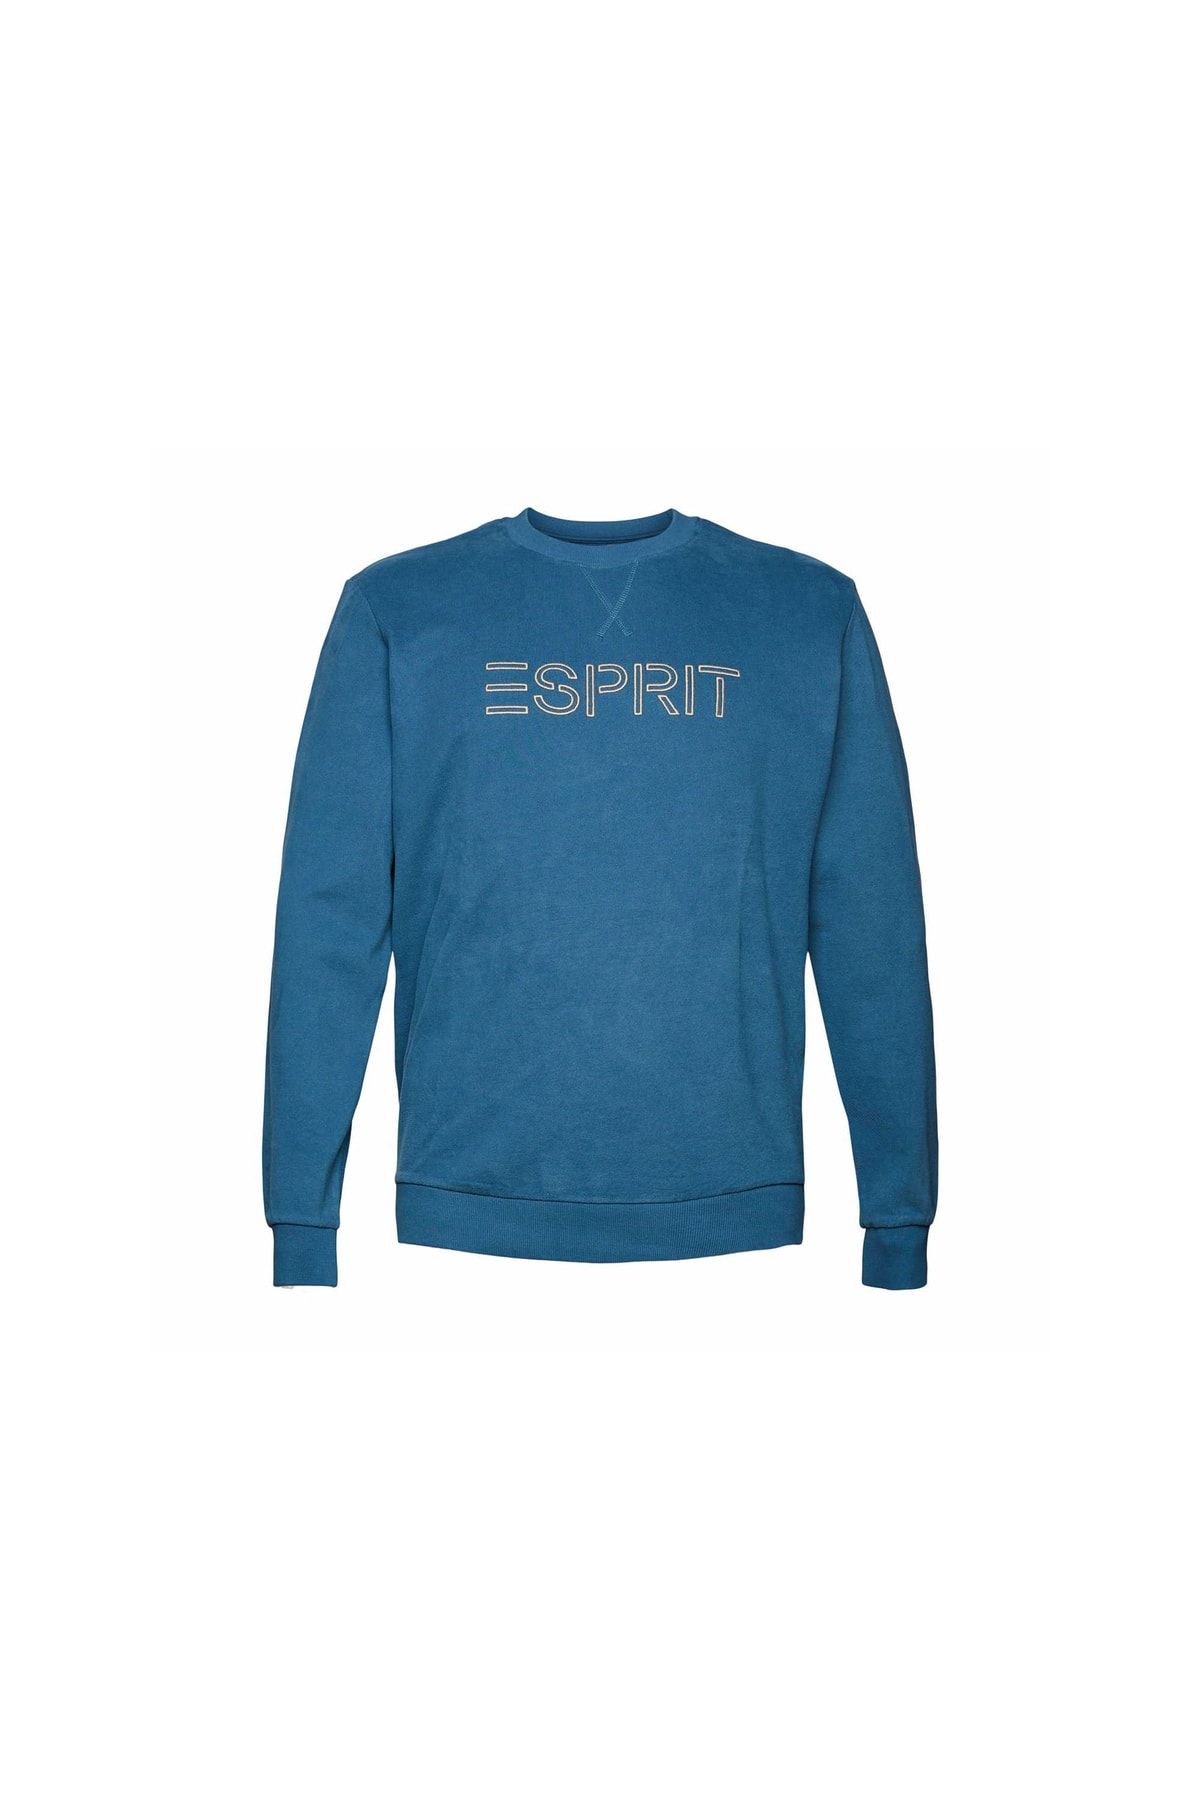 - - Trendyol Regular Pullover Blau Fit - Esprit